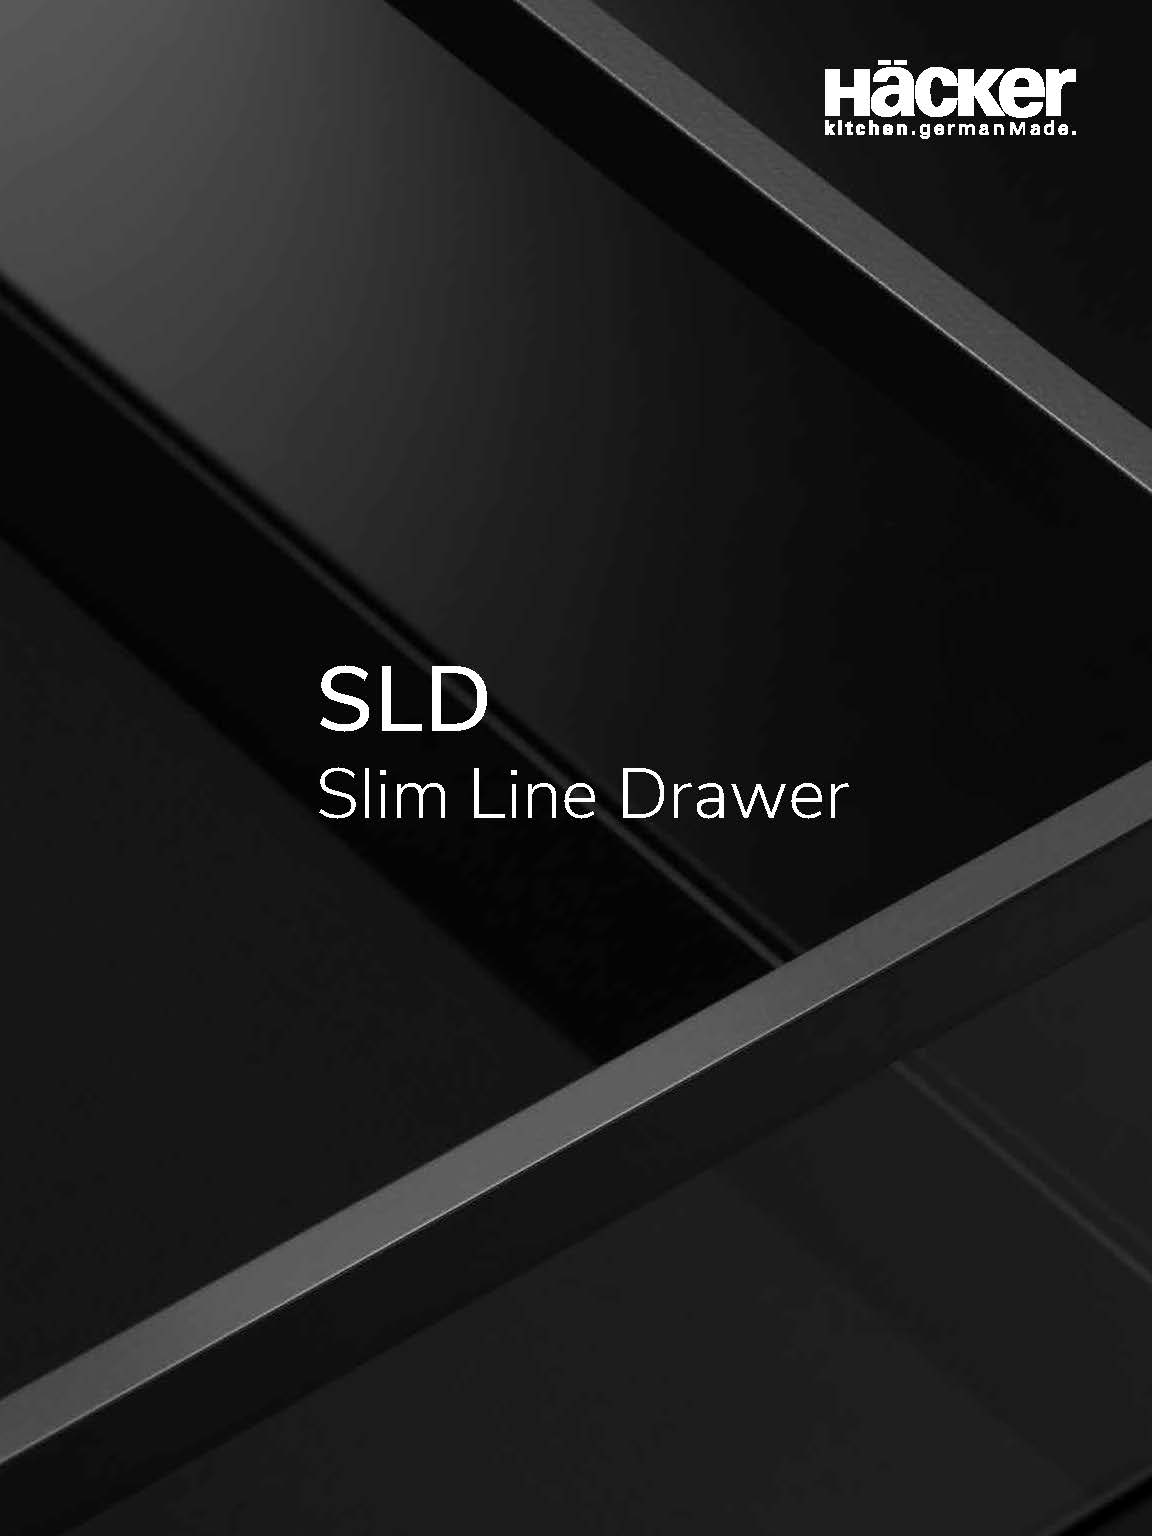 [Translate to Español:] Slim Line Drawer